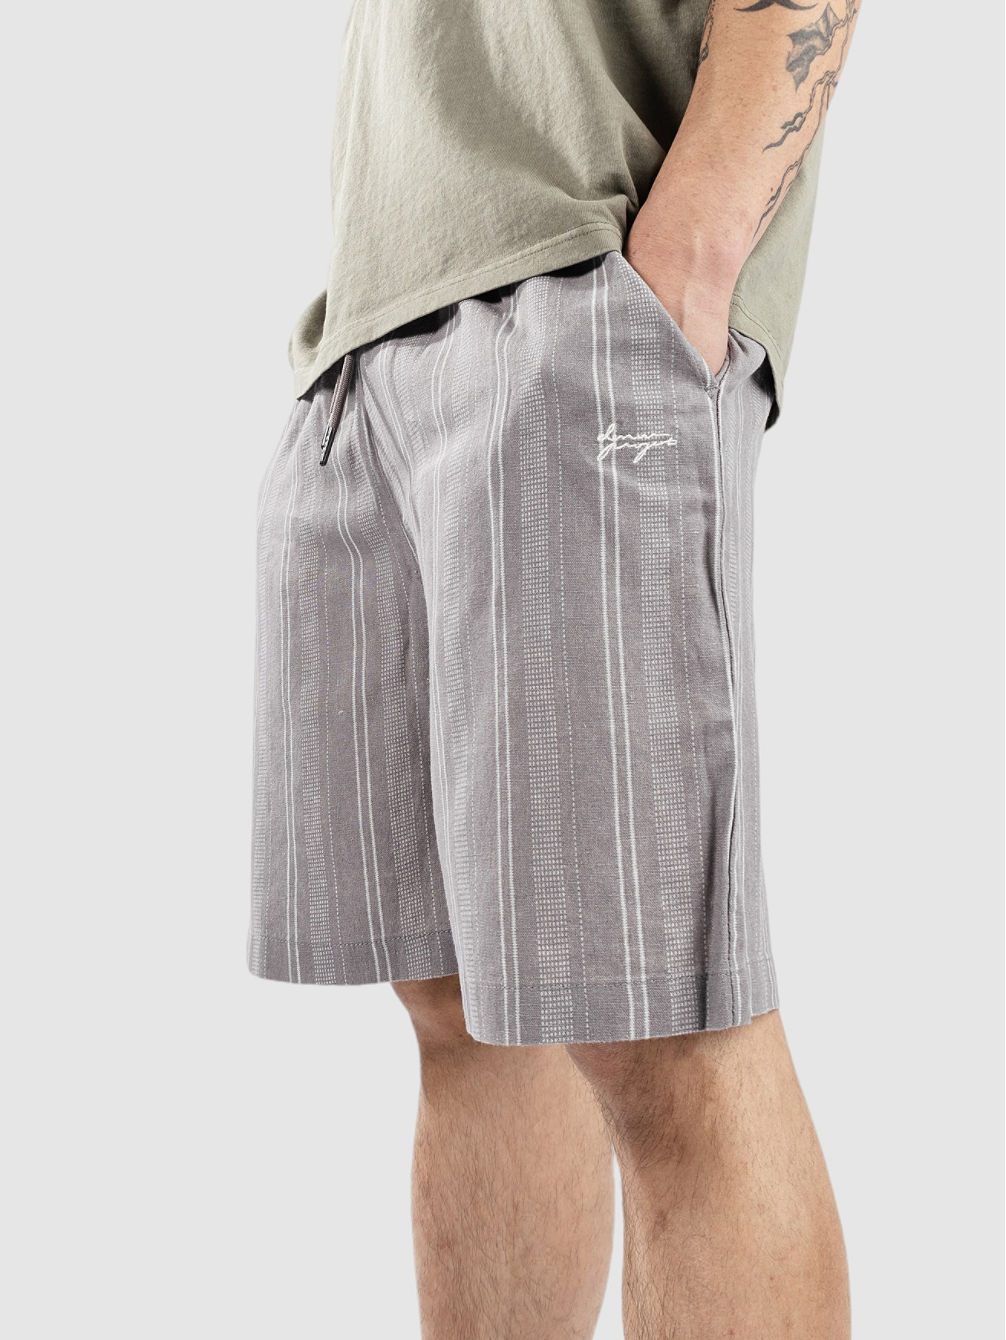 Stripe Linen Blend Pantalones Cortos